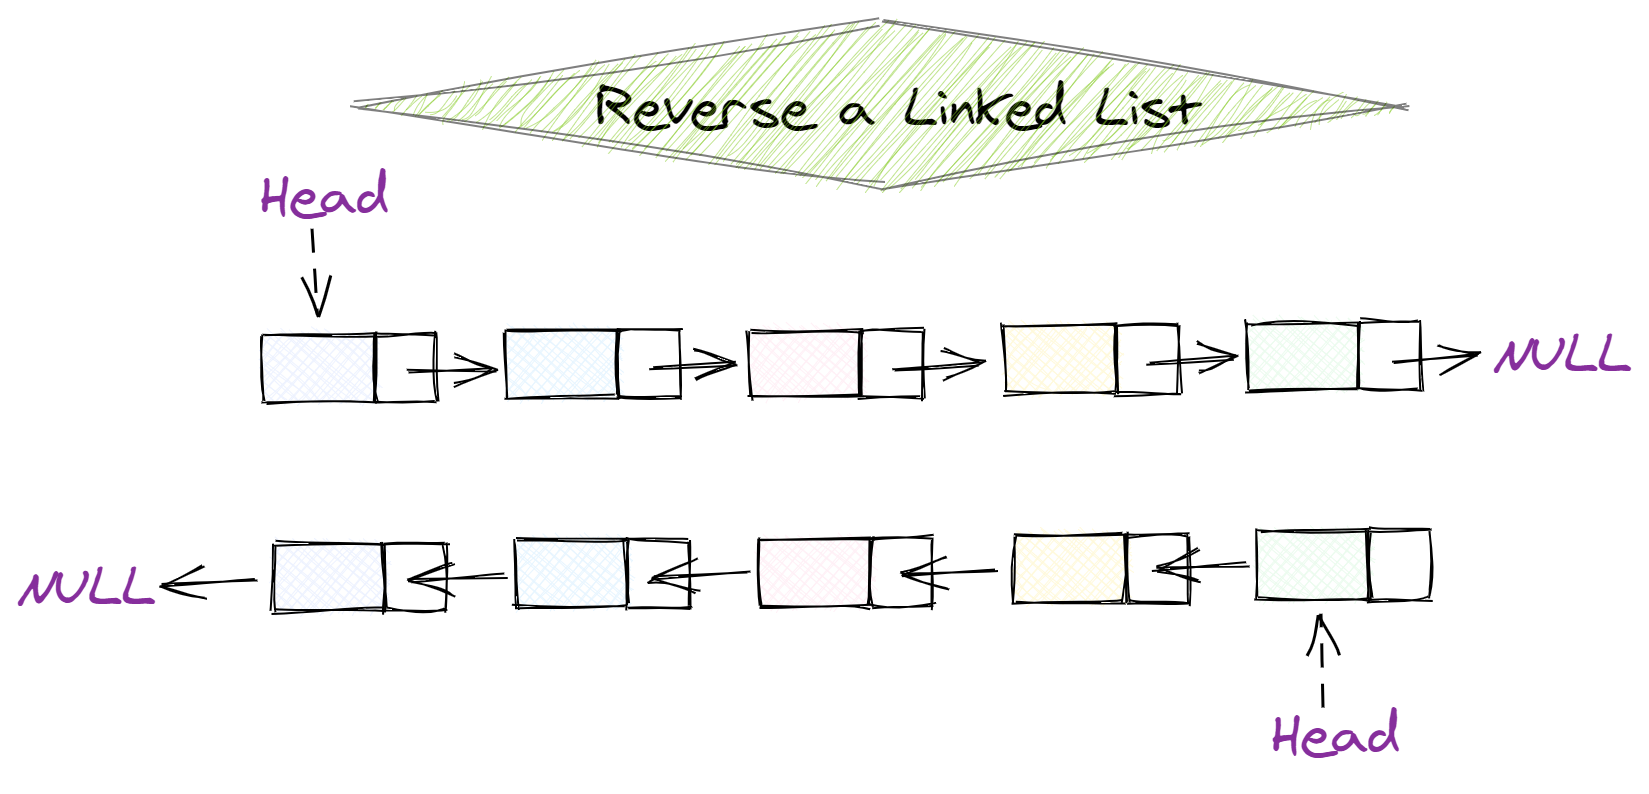 algodaily-reverse-a-linked-list-description